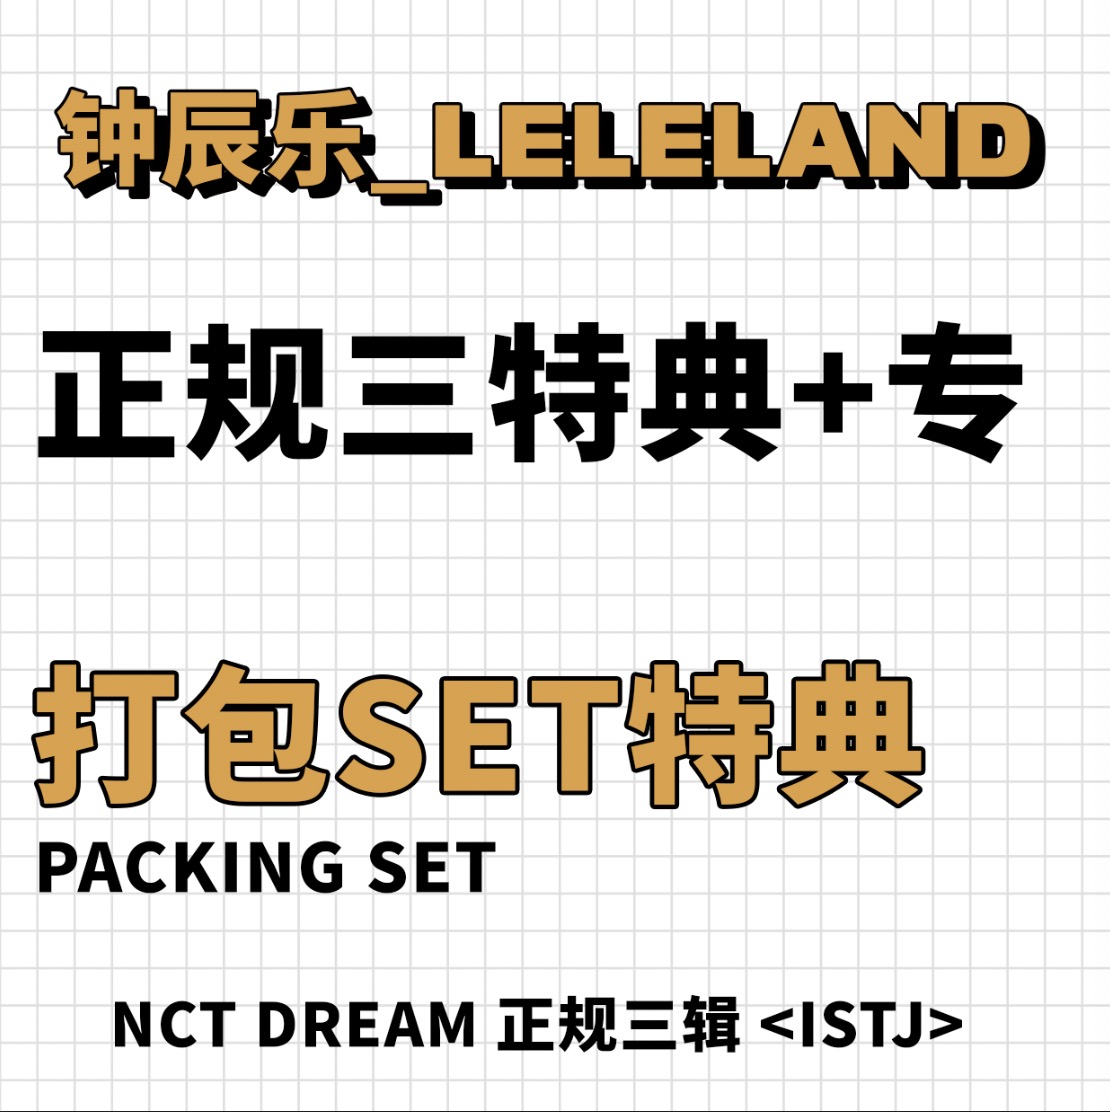 [全款 打包seta|setb特典专] NCT DREAM - 正规3辑 [ISTJ]_钟辰乐吧_ChenLeBar